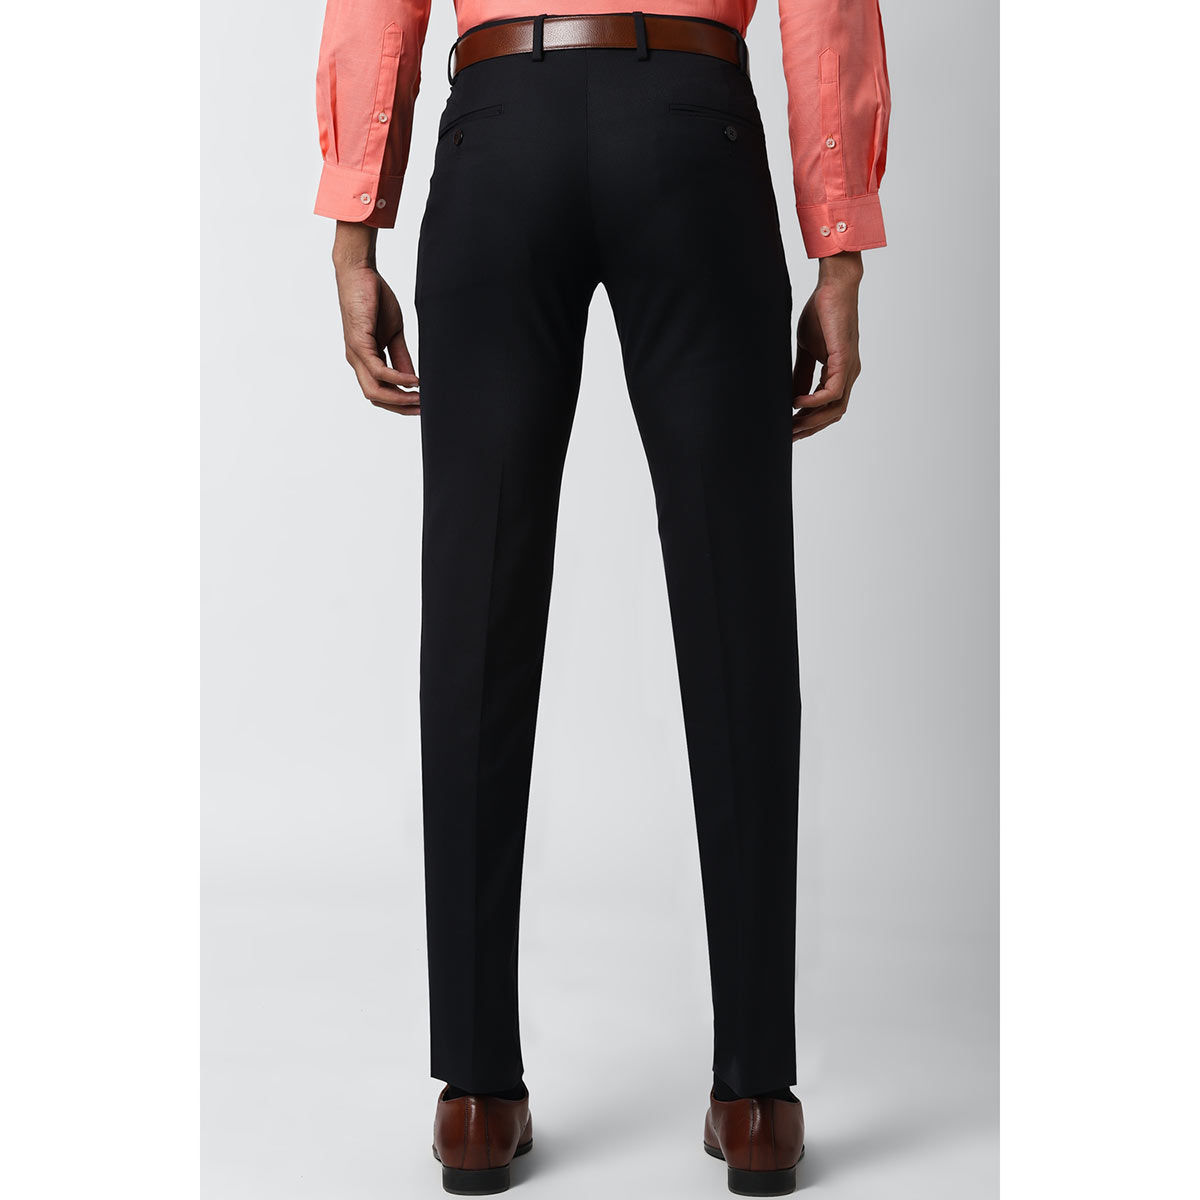 Buy Men Black Solid Regular Fit Formal Trousers Online - 656330 | Peter  England